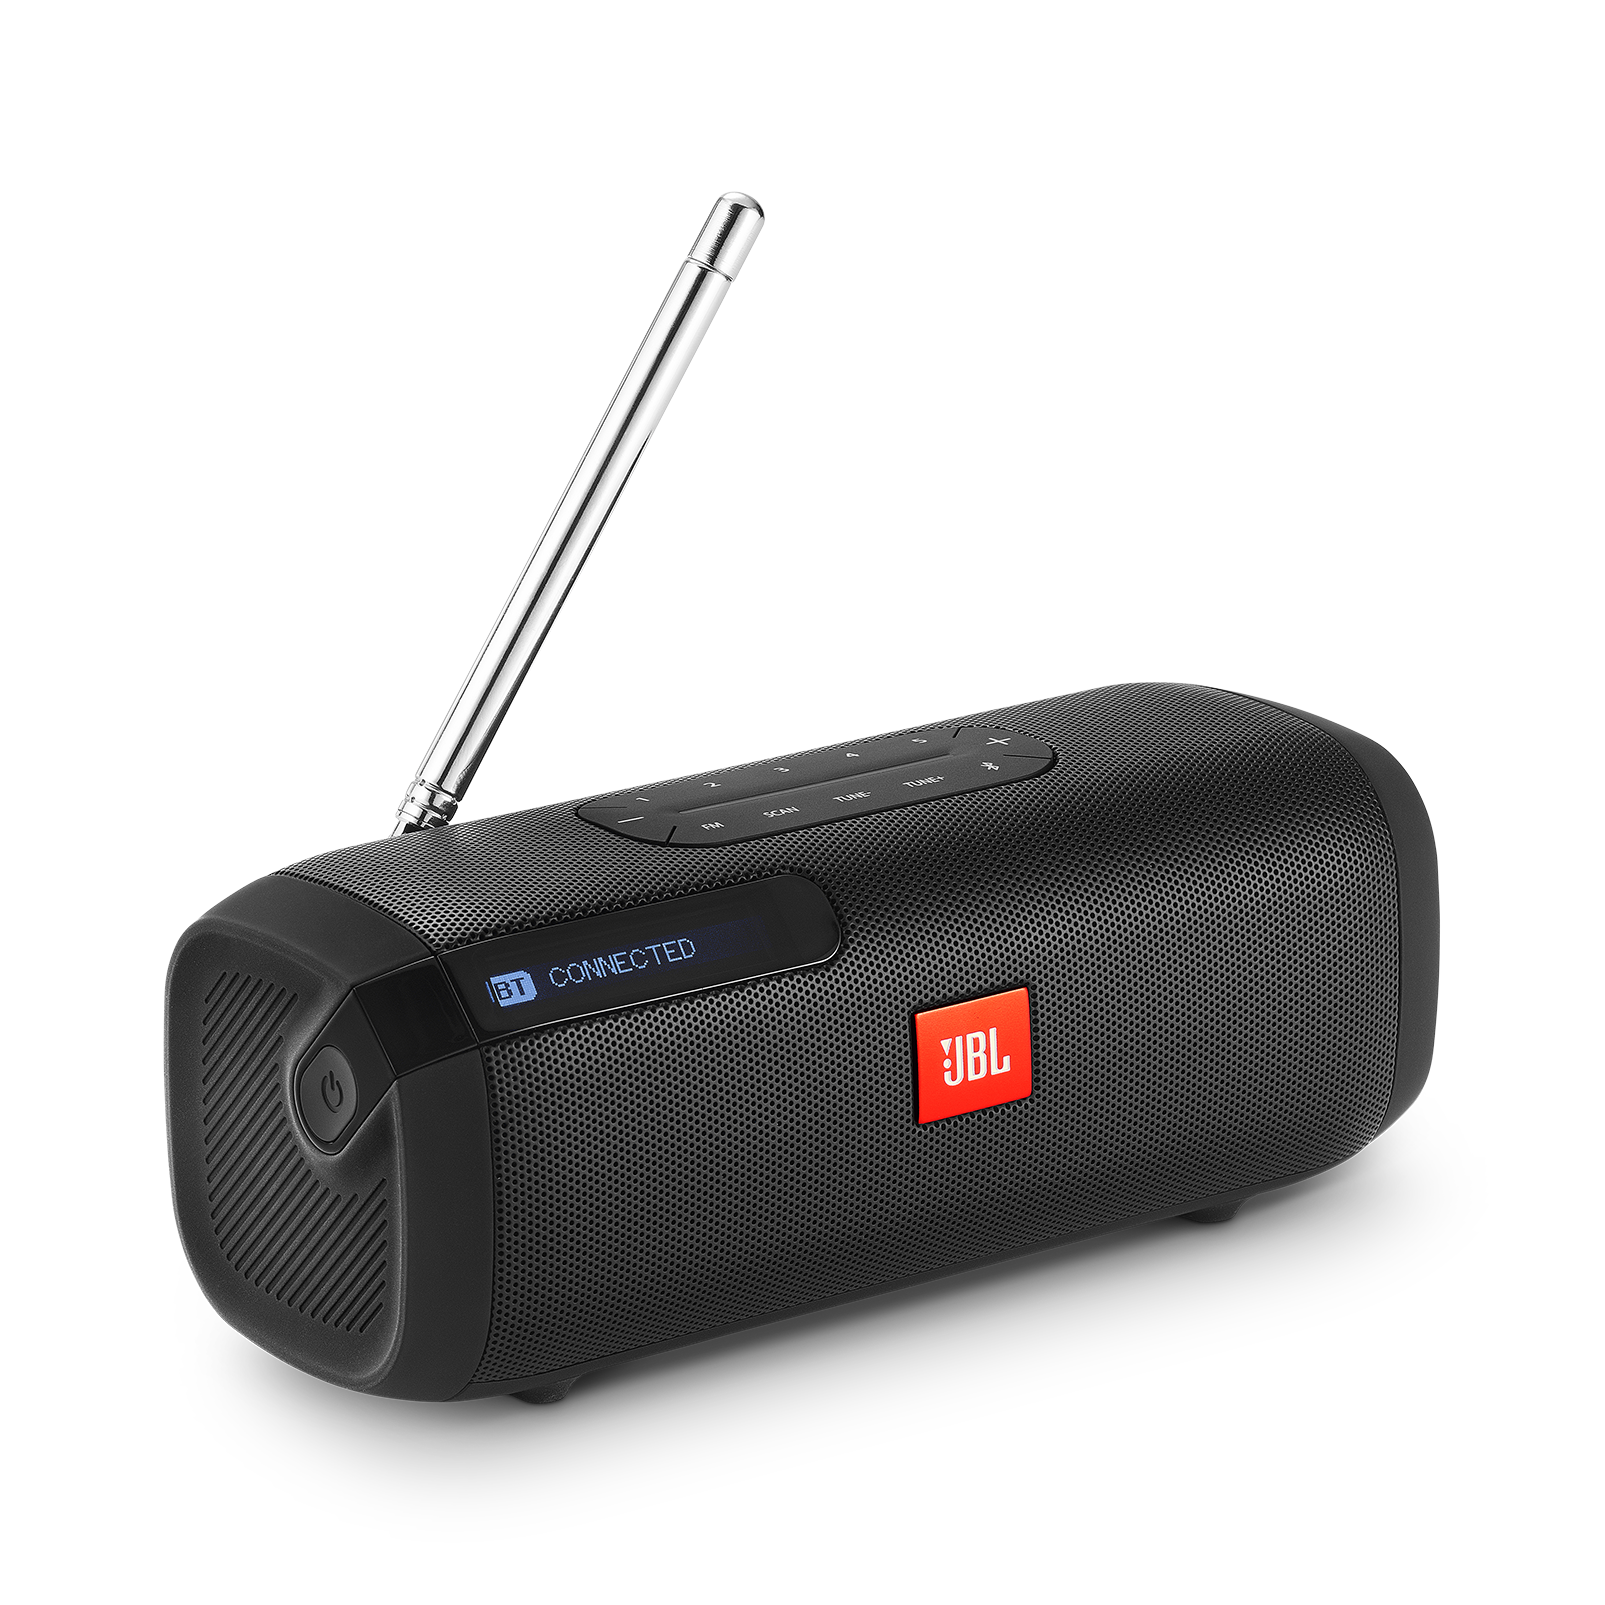 Portable Bluetooth Speaker with FM radio